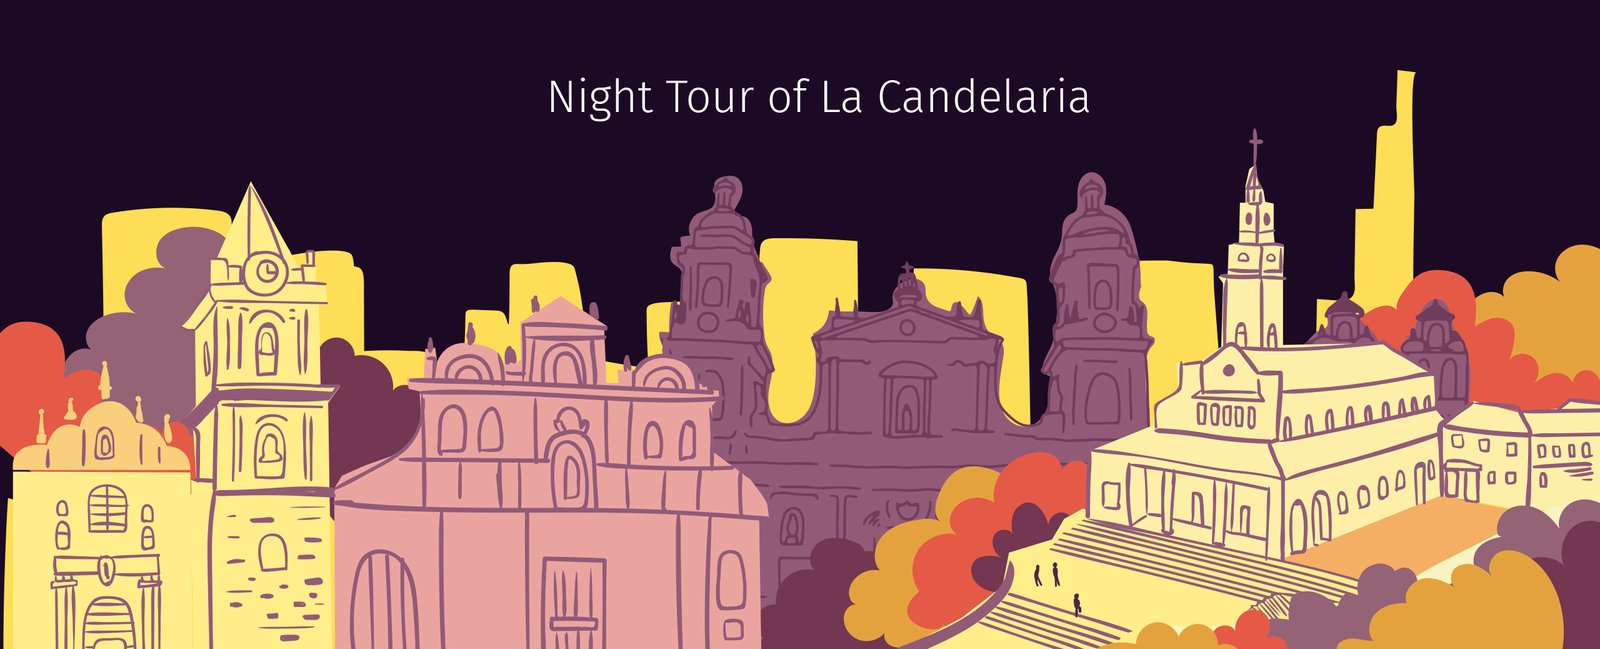 Night Tour of La Candelaria